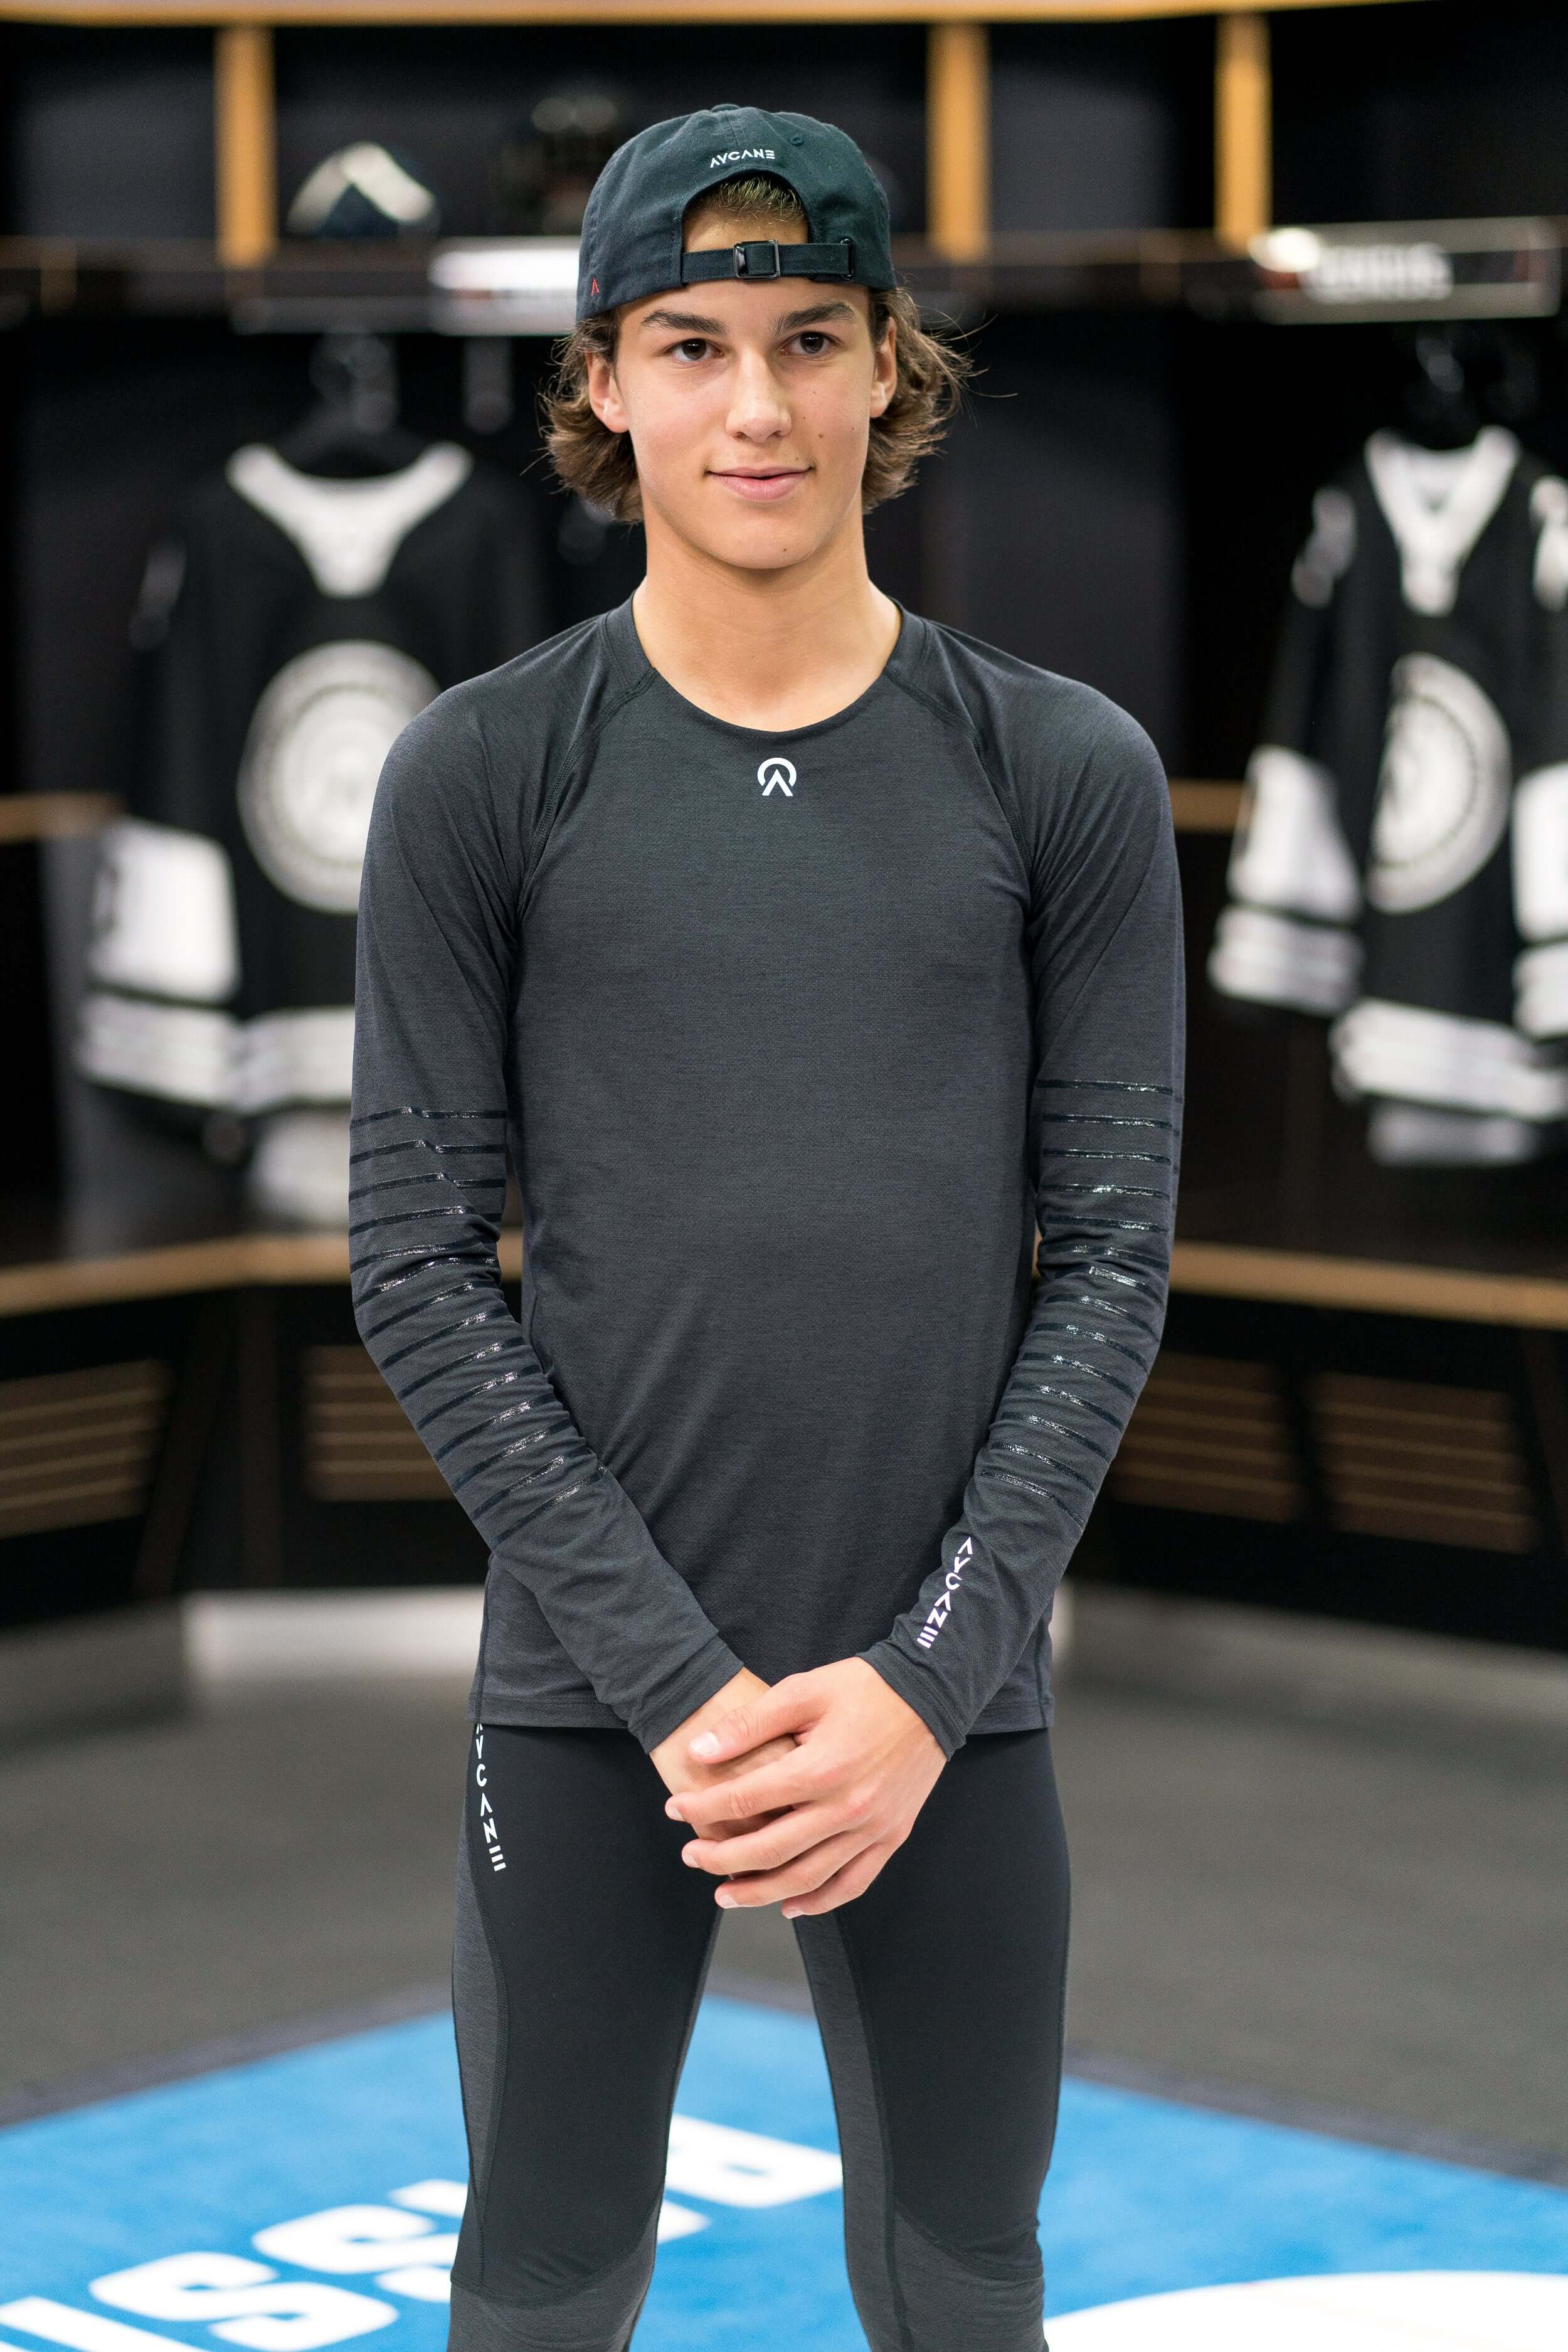 Youth hockey player in the locker room wearing an AYCANE hockey undergarment in black